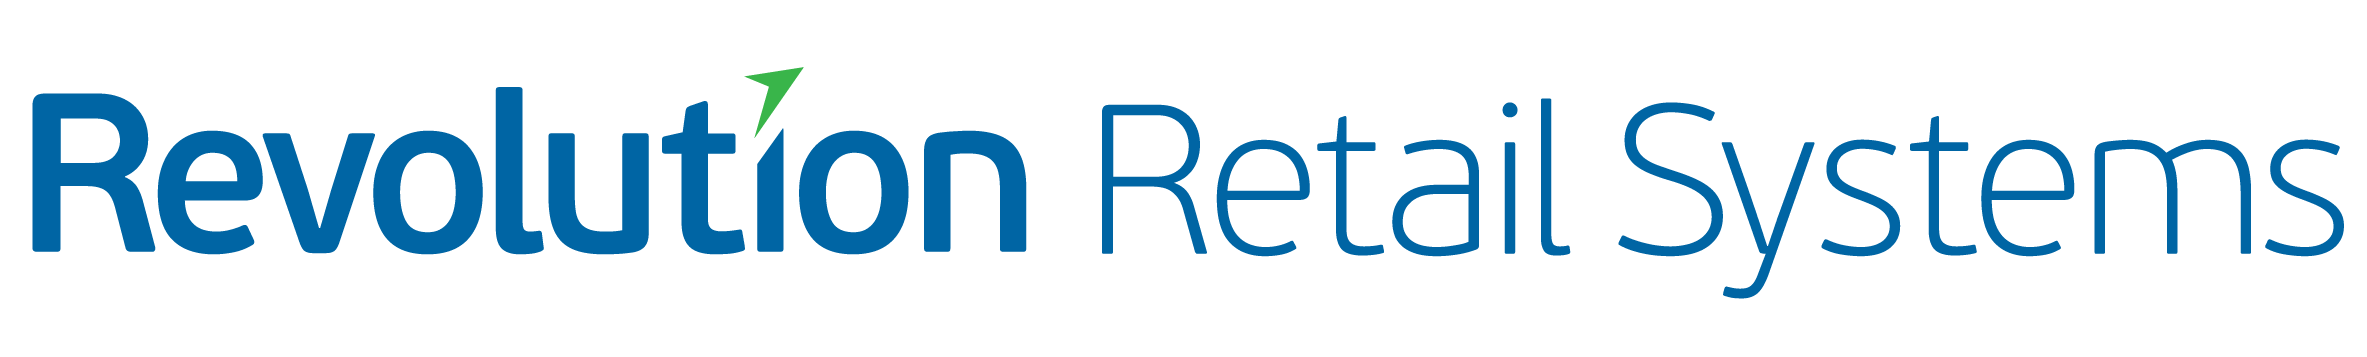 Revolution Retail Systems LLC logo